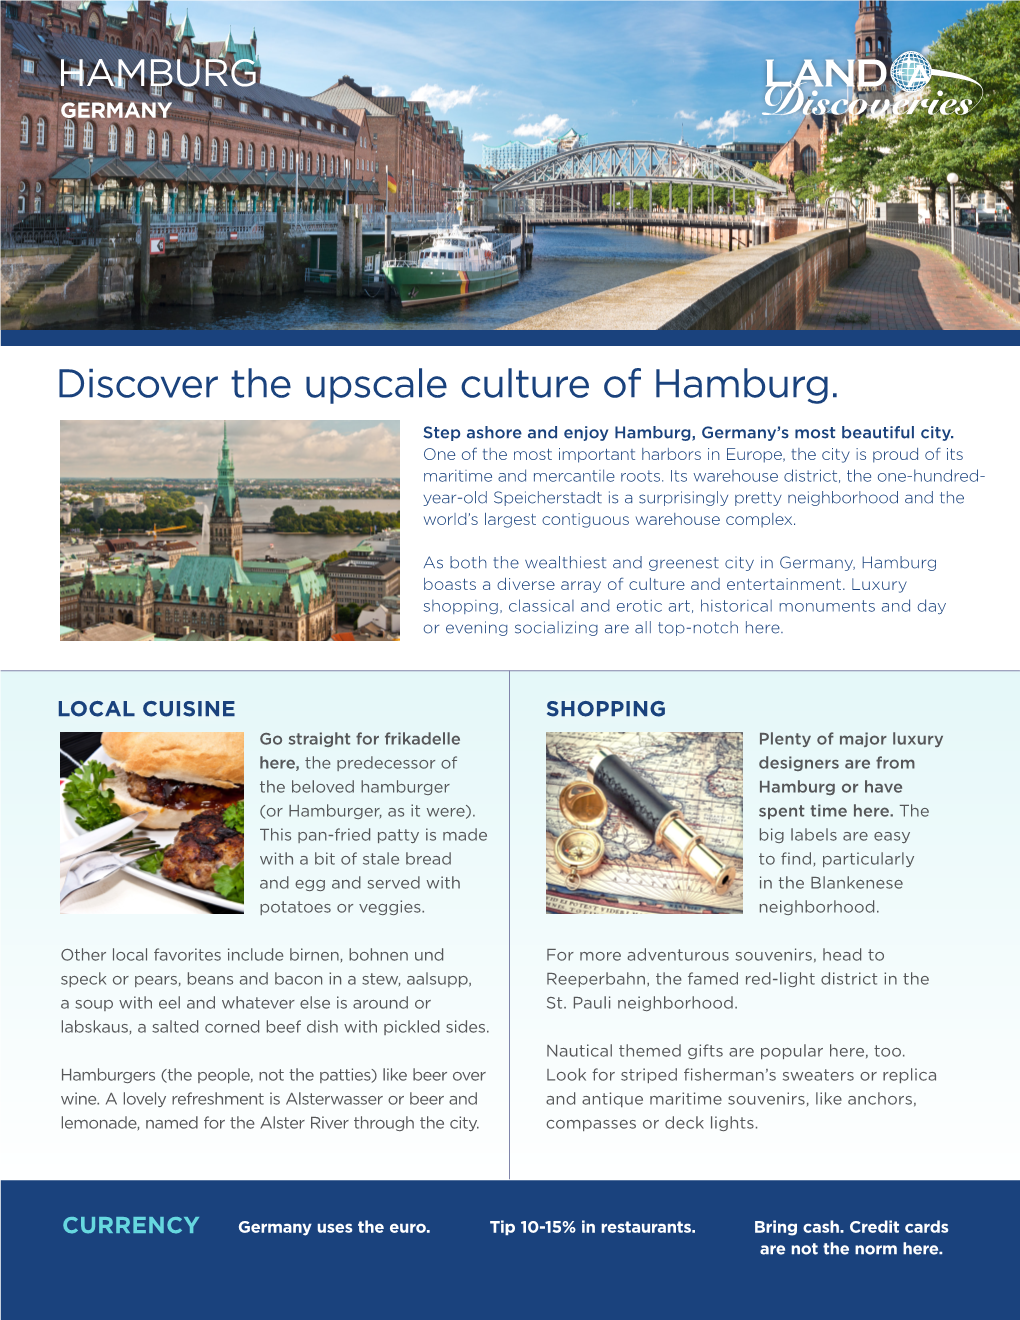 Discover the Upscale Culture of Hamburg